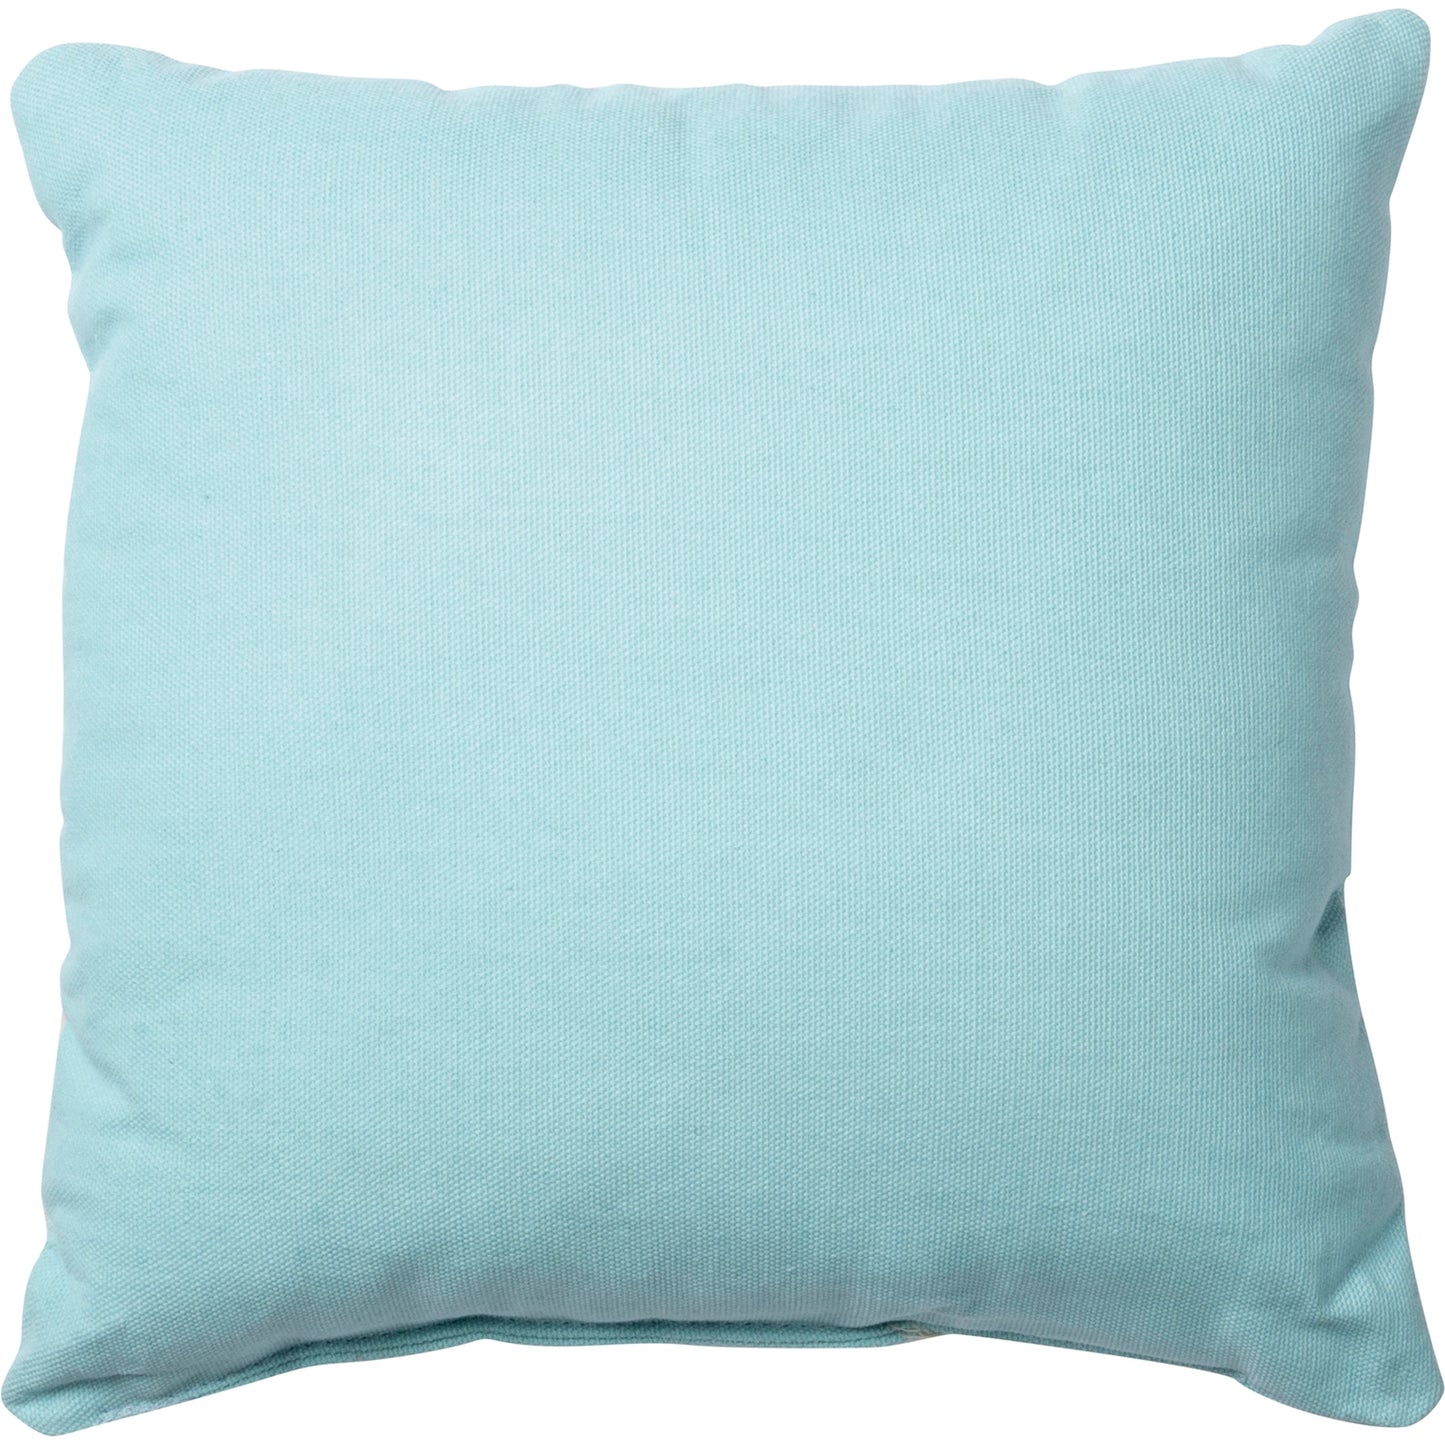 Mermaids Pillow